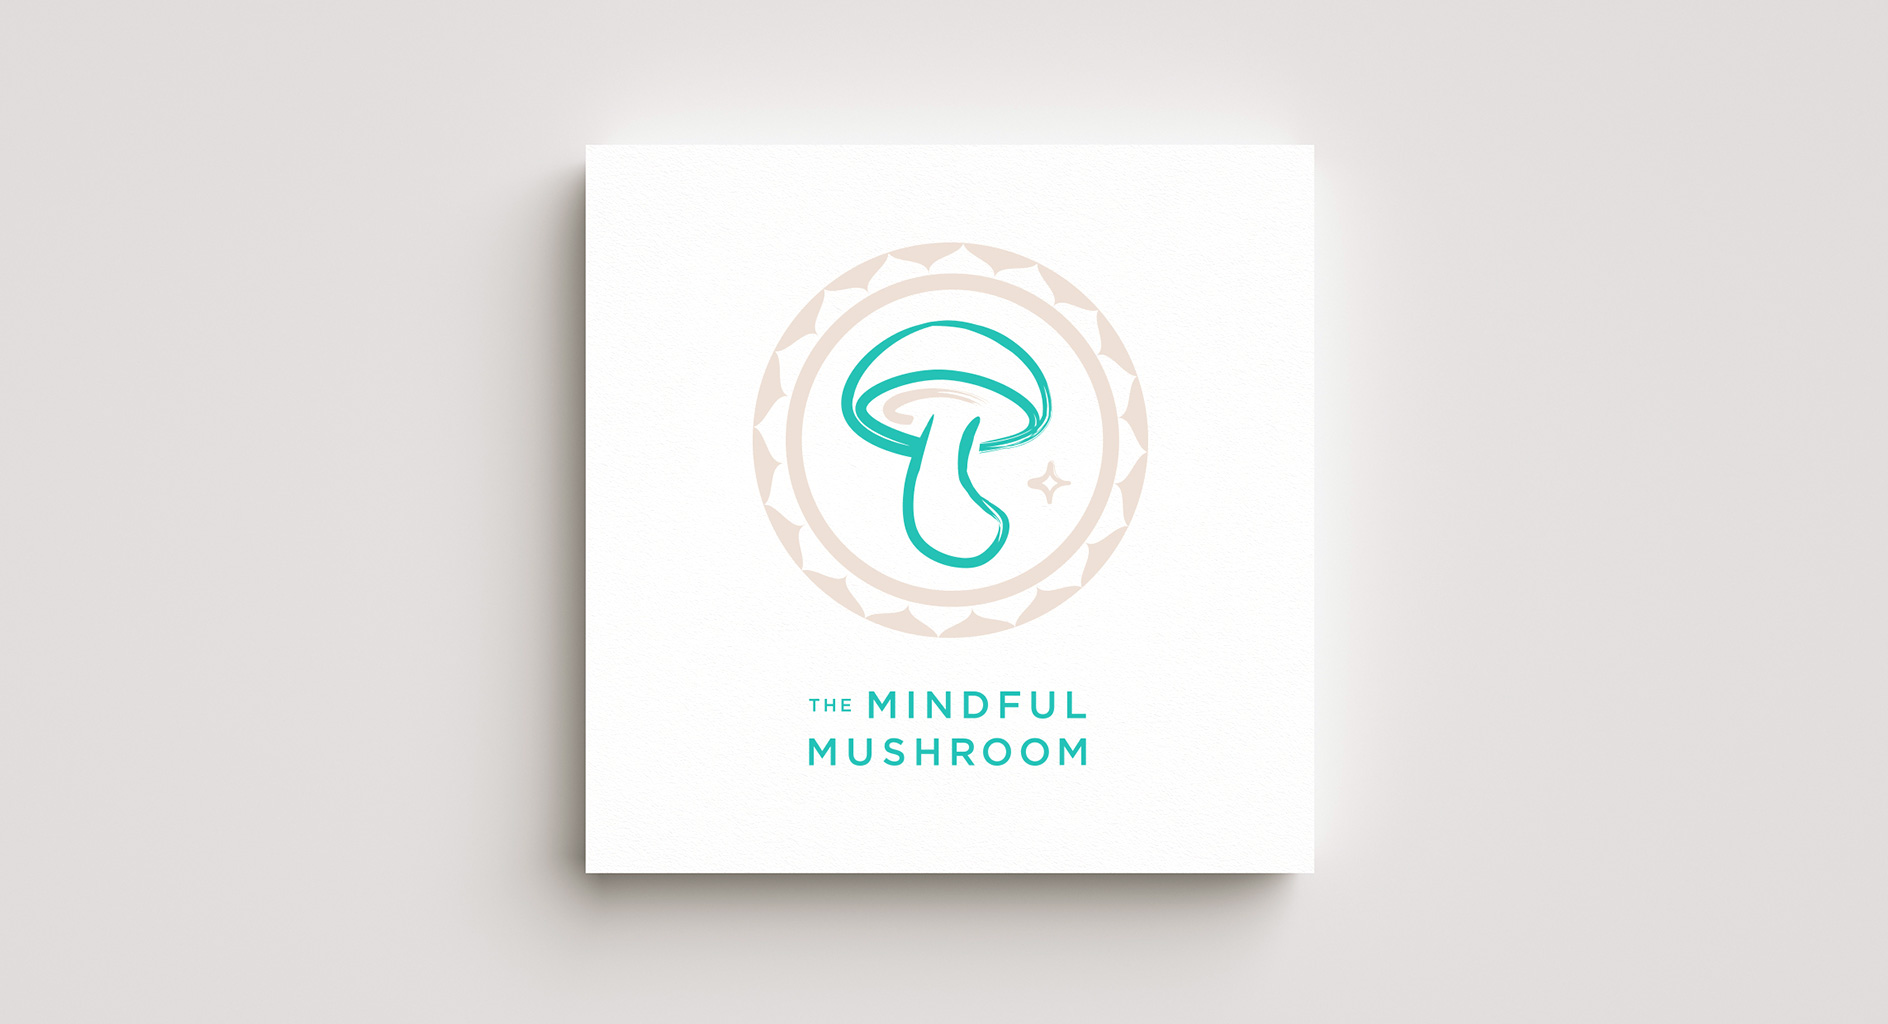 The Mindful Mushroom, Compel Co.